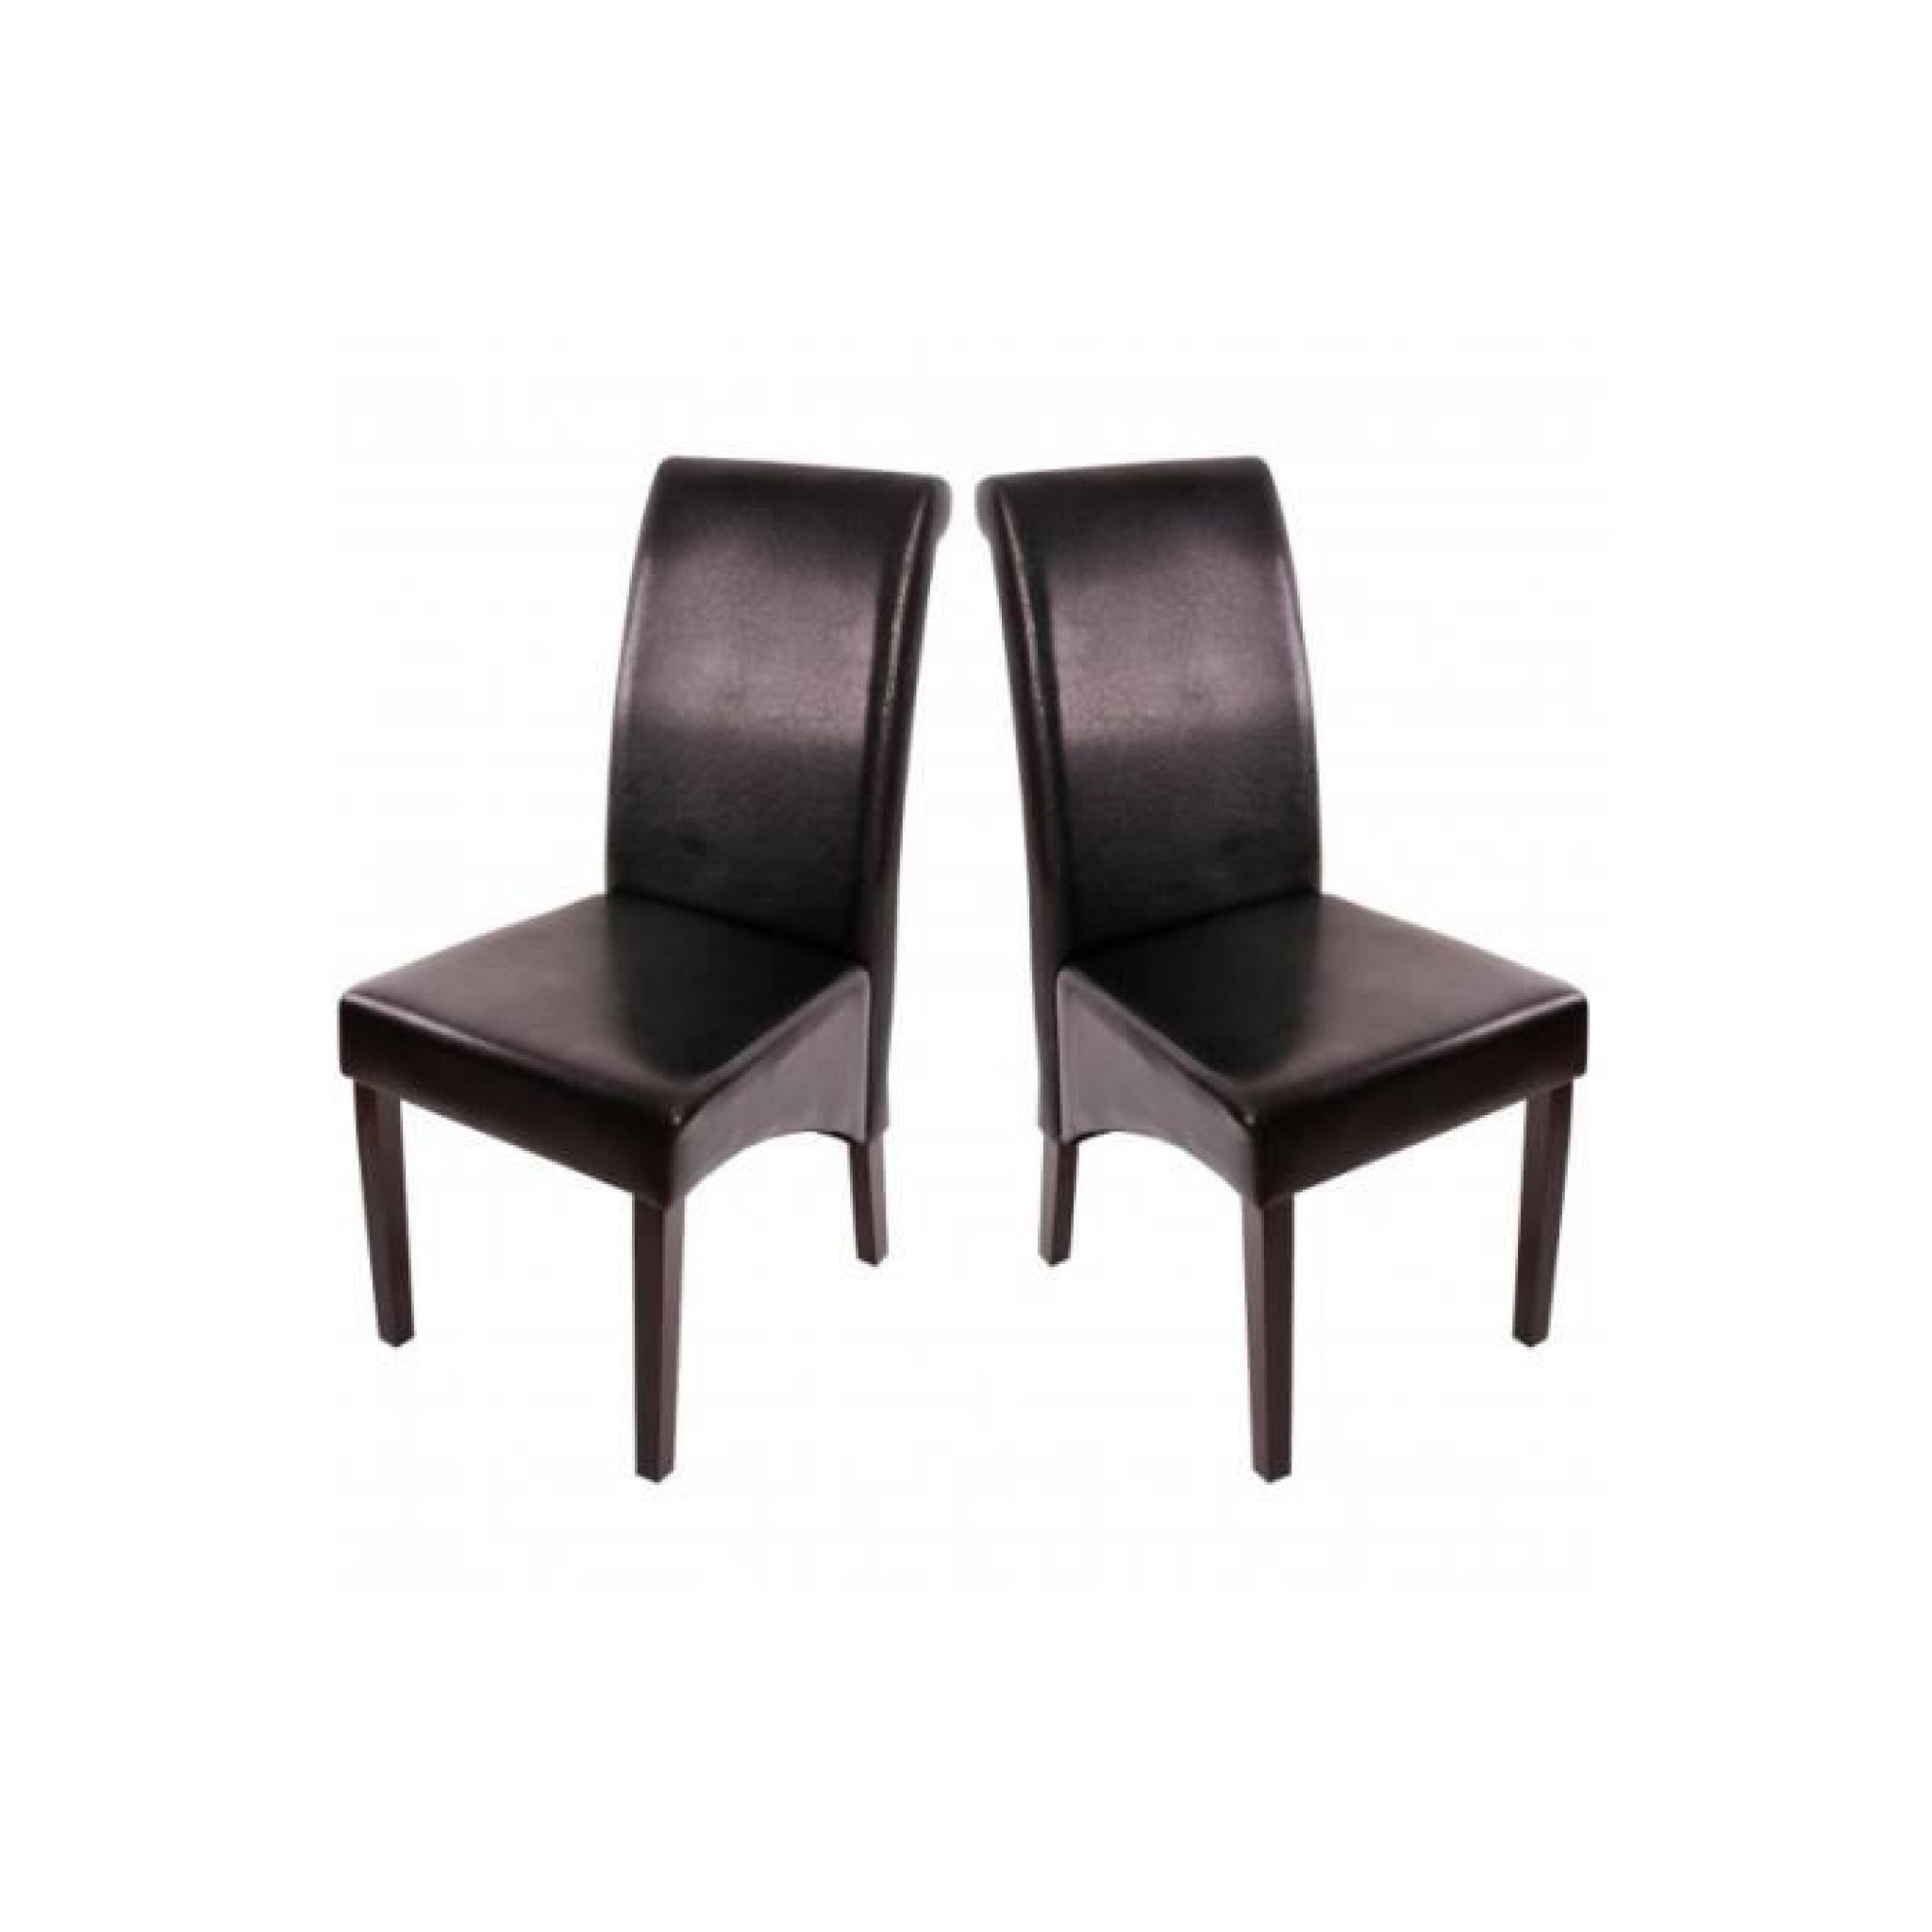 2x Salle Chaise inclinable en cuir M37 ~, noir, pieds noirs